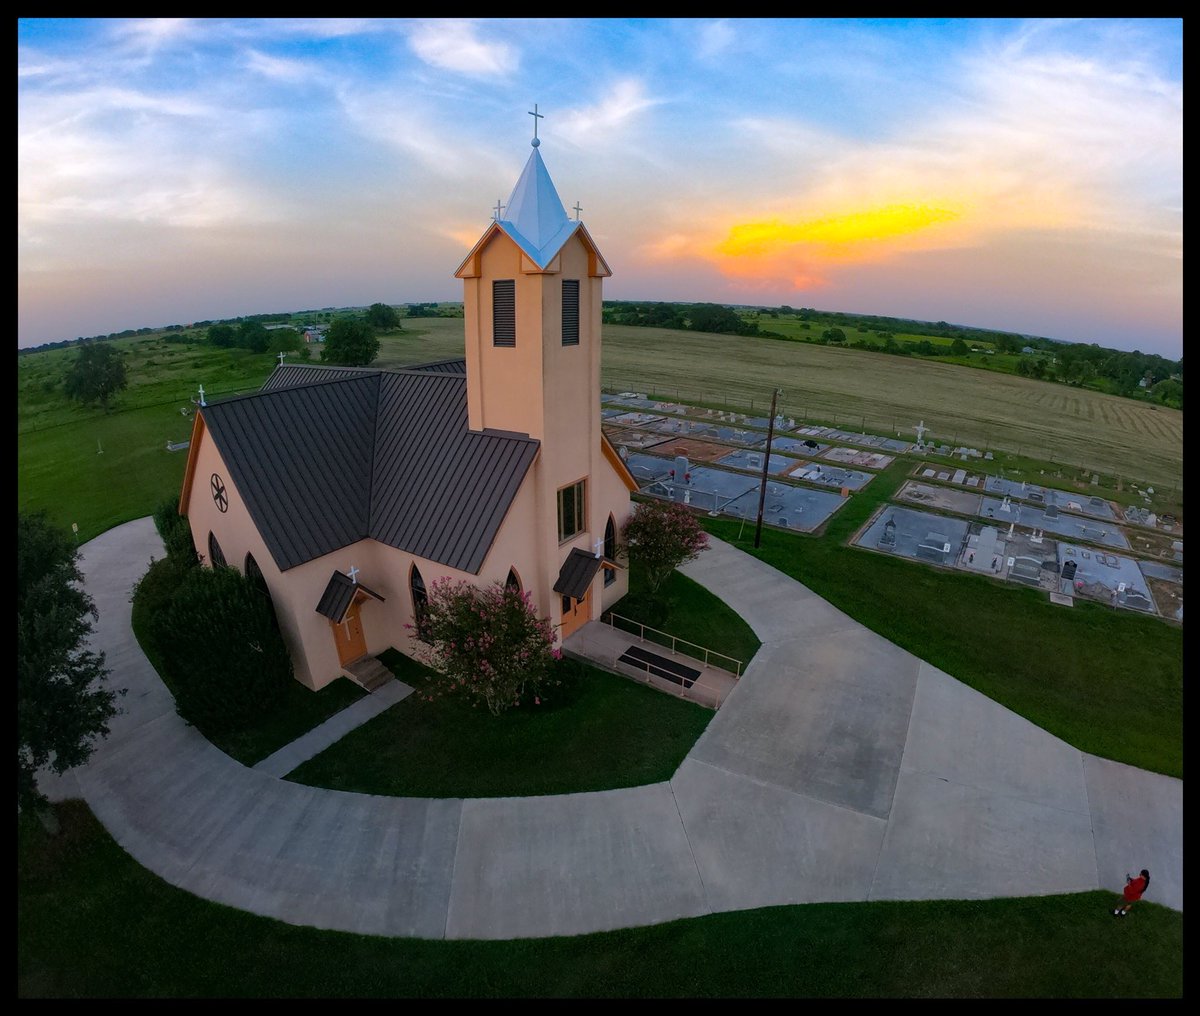 Last Picture of My Day #2778 St. Ann Catholic Church, Yoakum, #Texas #aerialphotography #drone #goprokarma #churches lastpictureofmyday.com